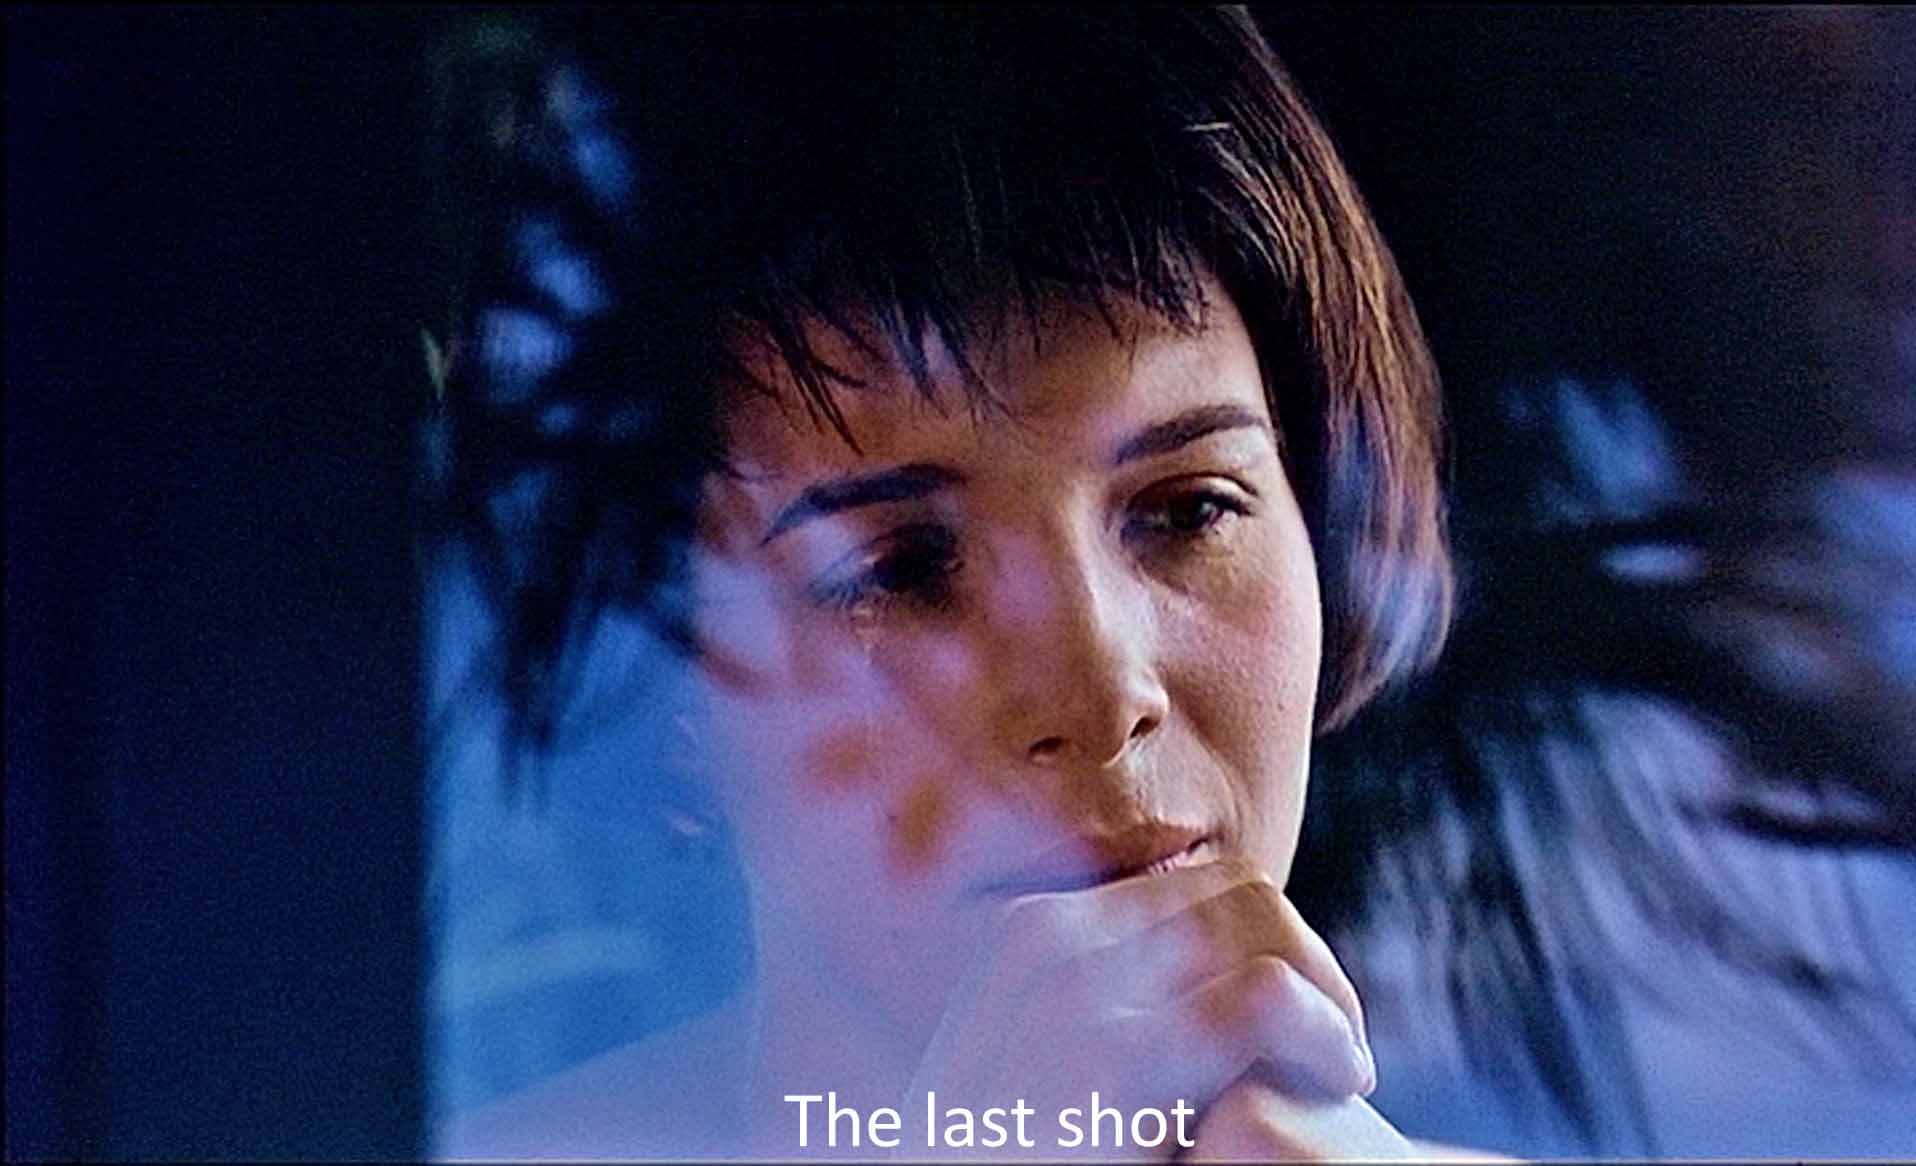 The last shot